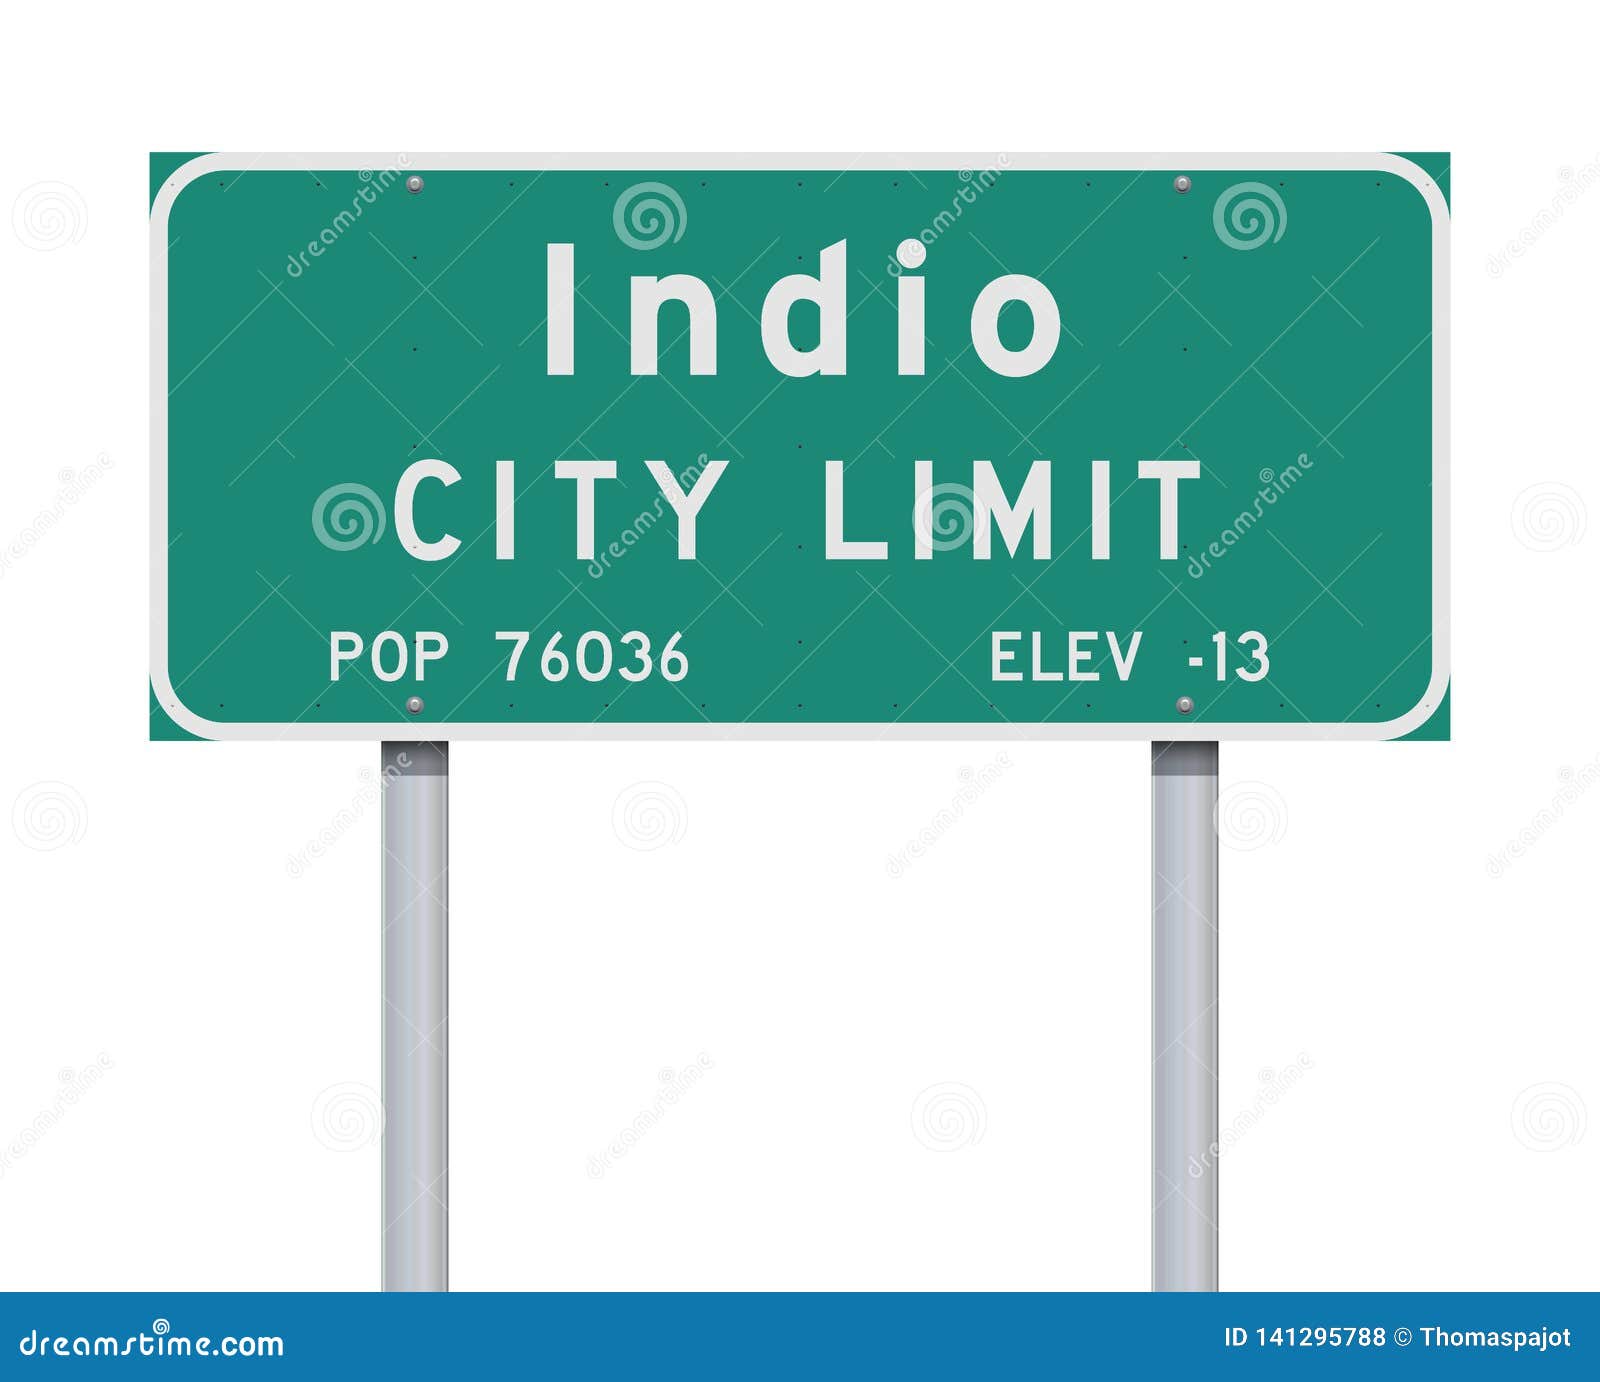 indio city limit road sign